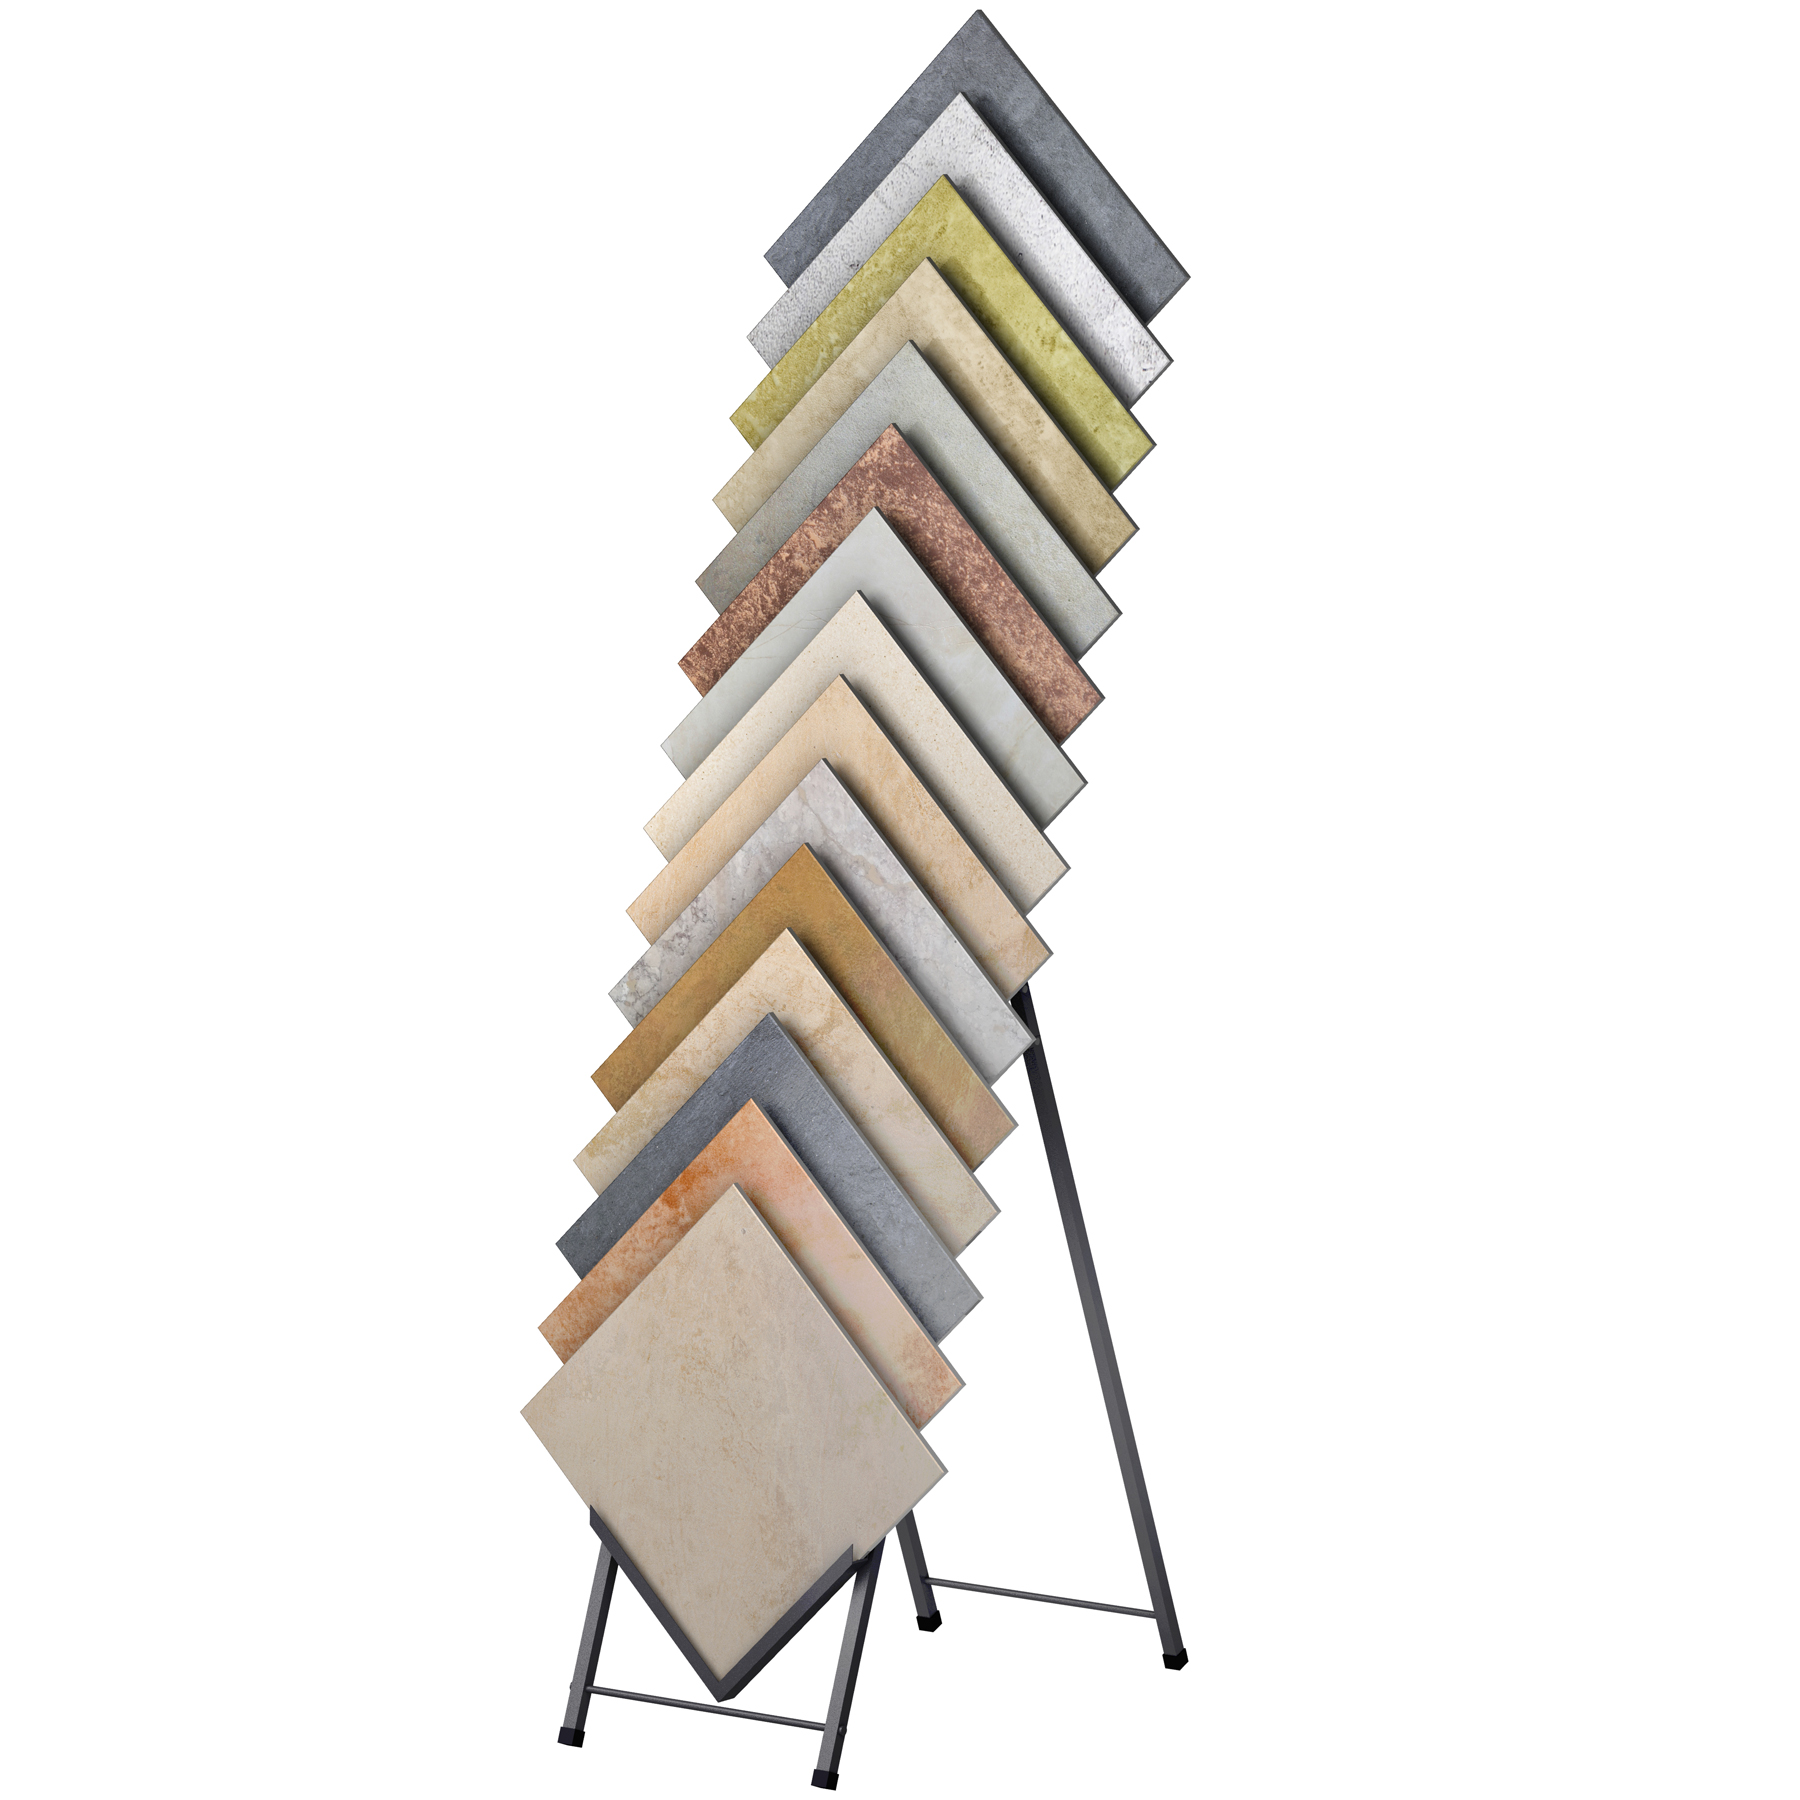 A15 Ceramic Tile Display folds easily durable steel frame